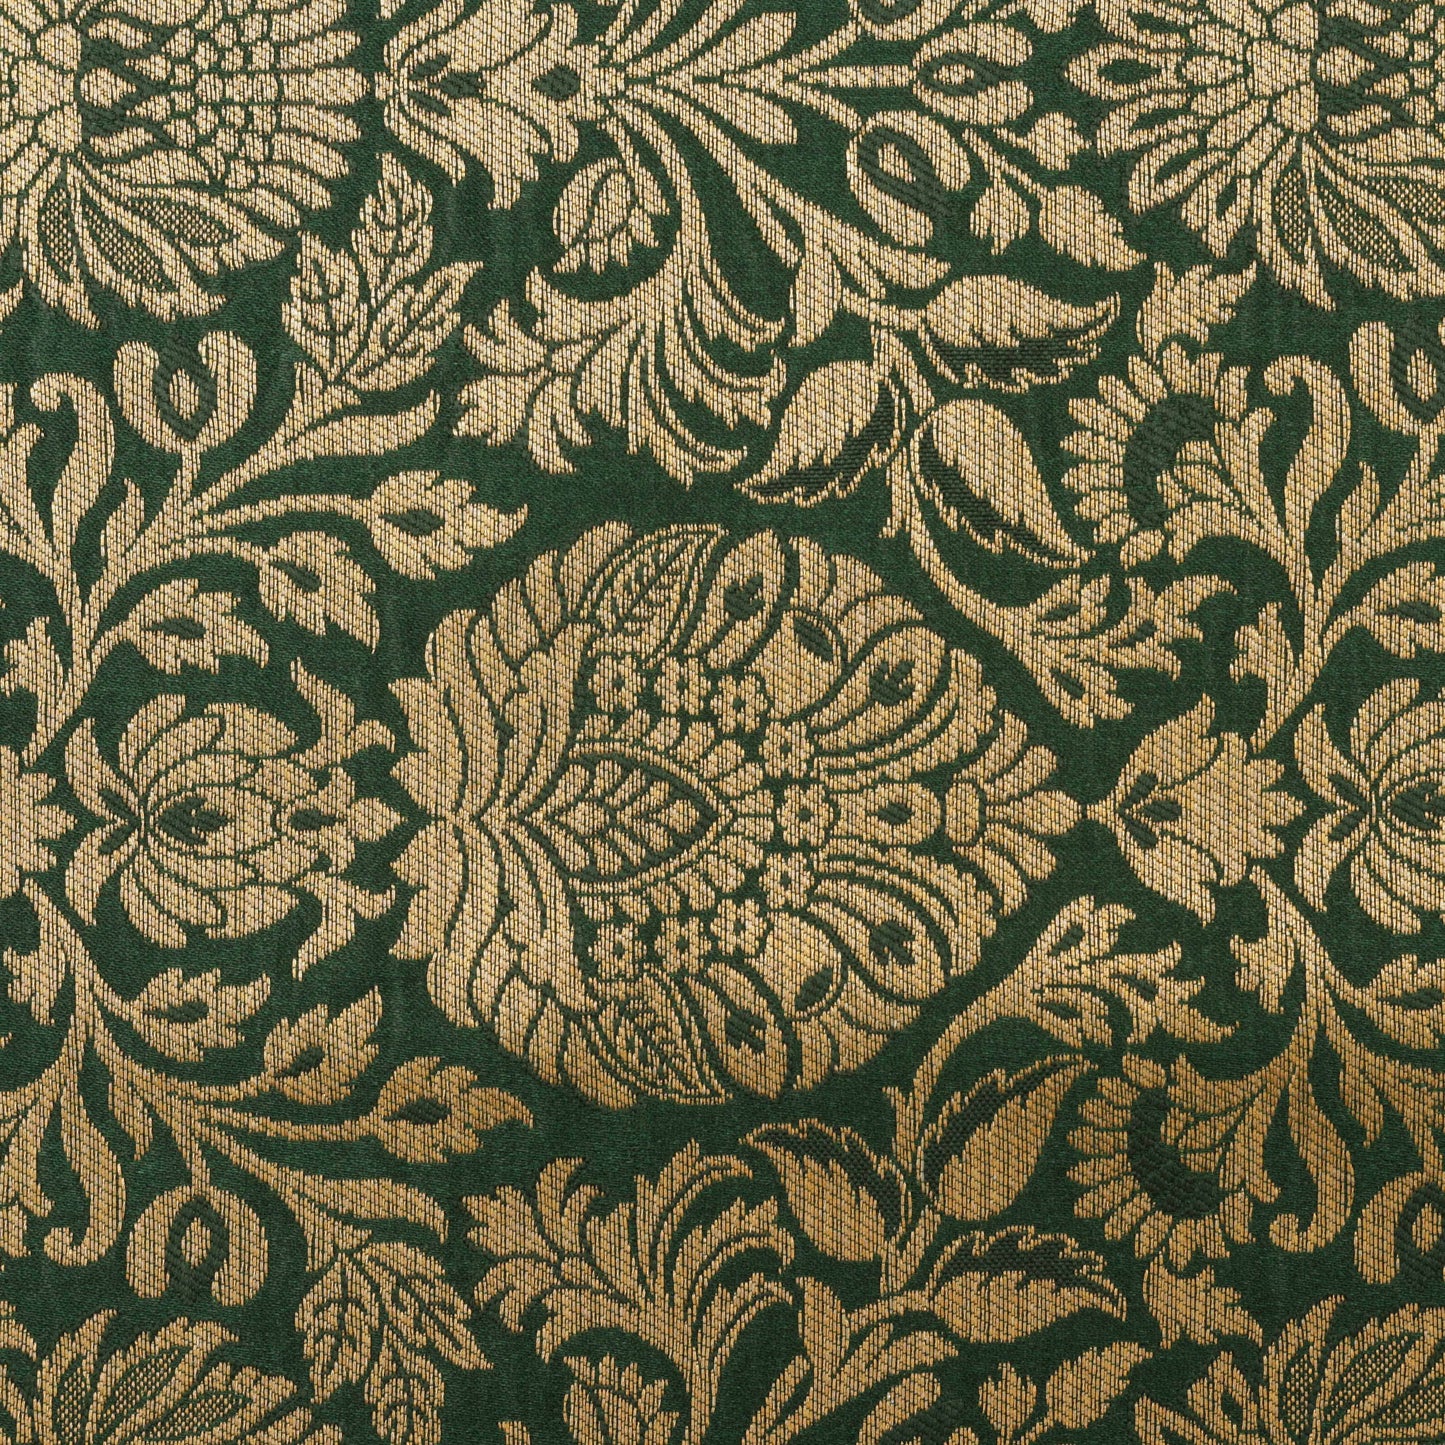 Bottle Green Color Zari Brocade Fabric